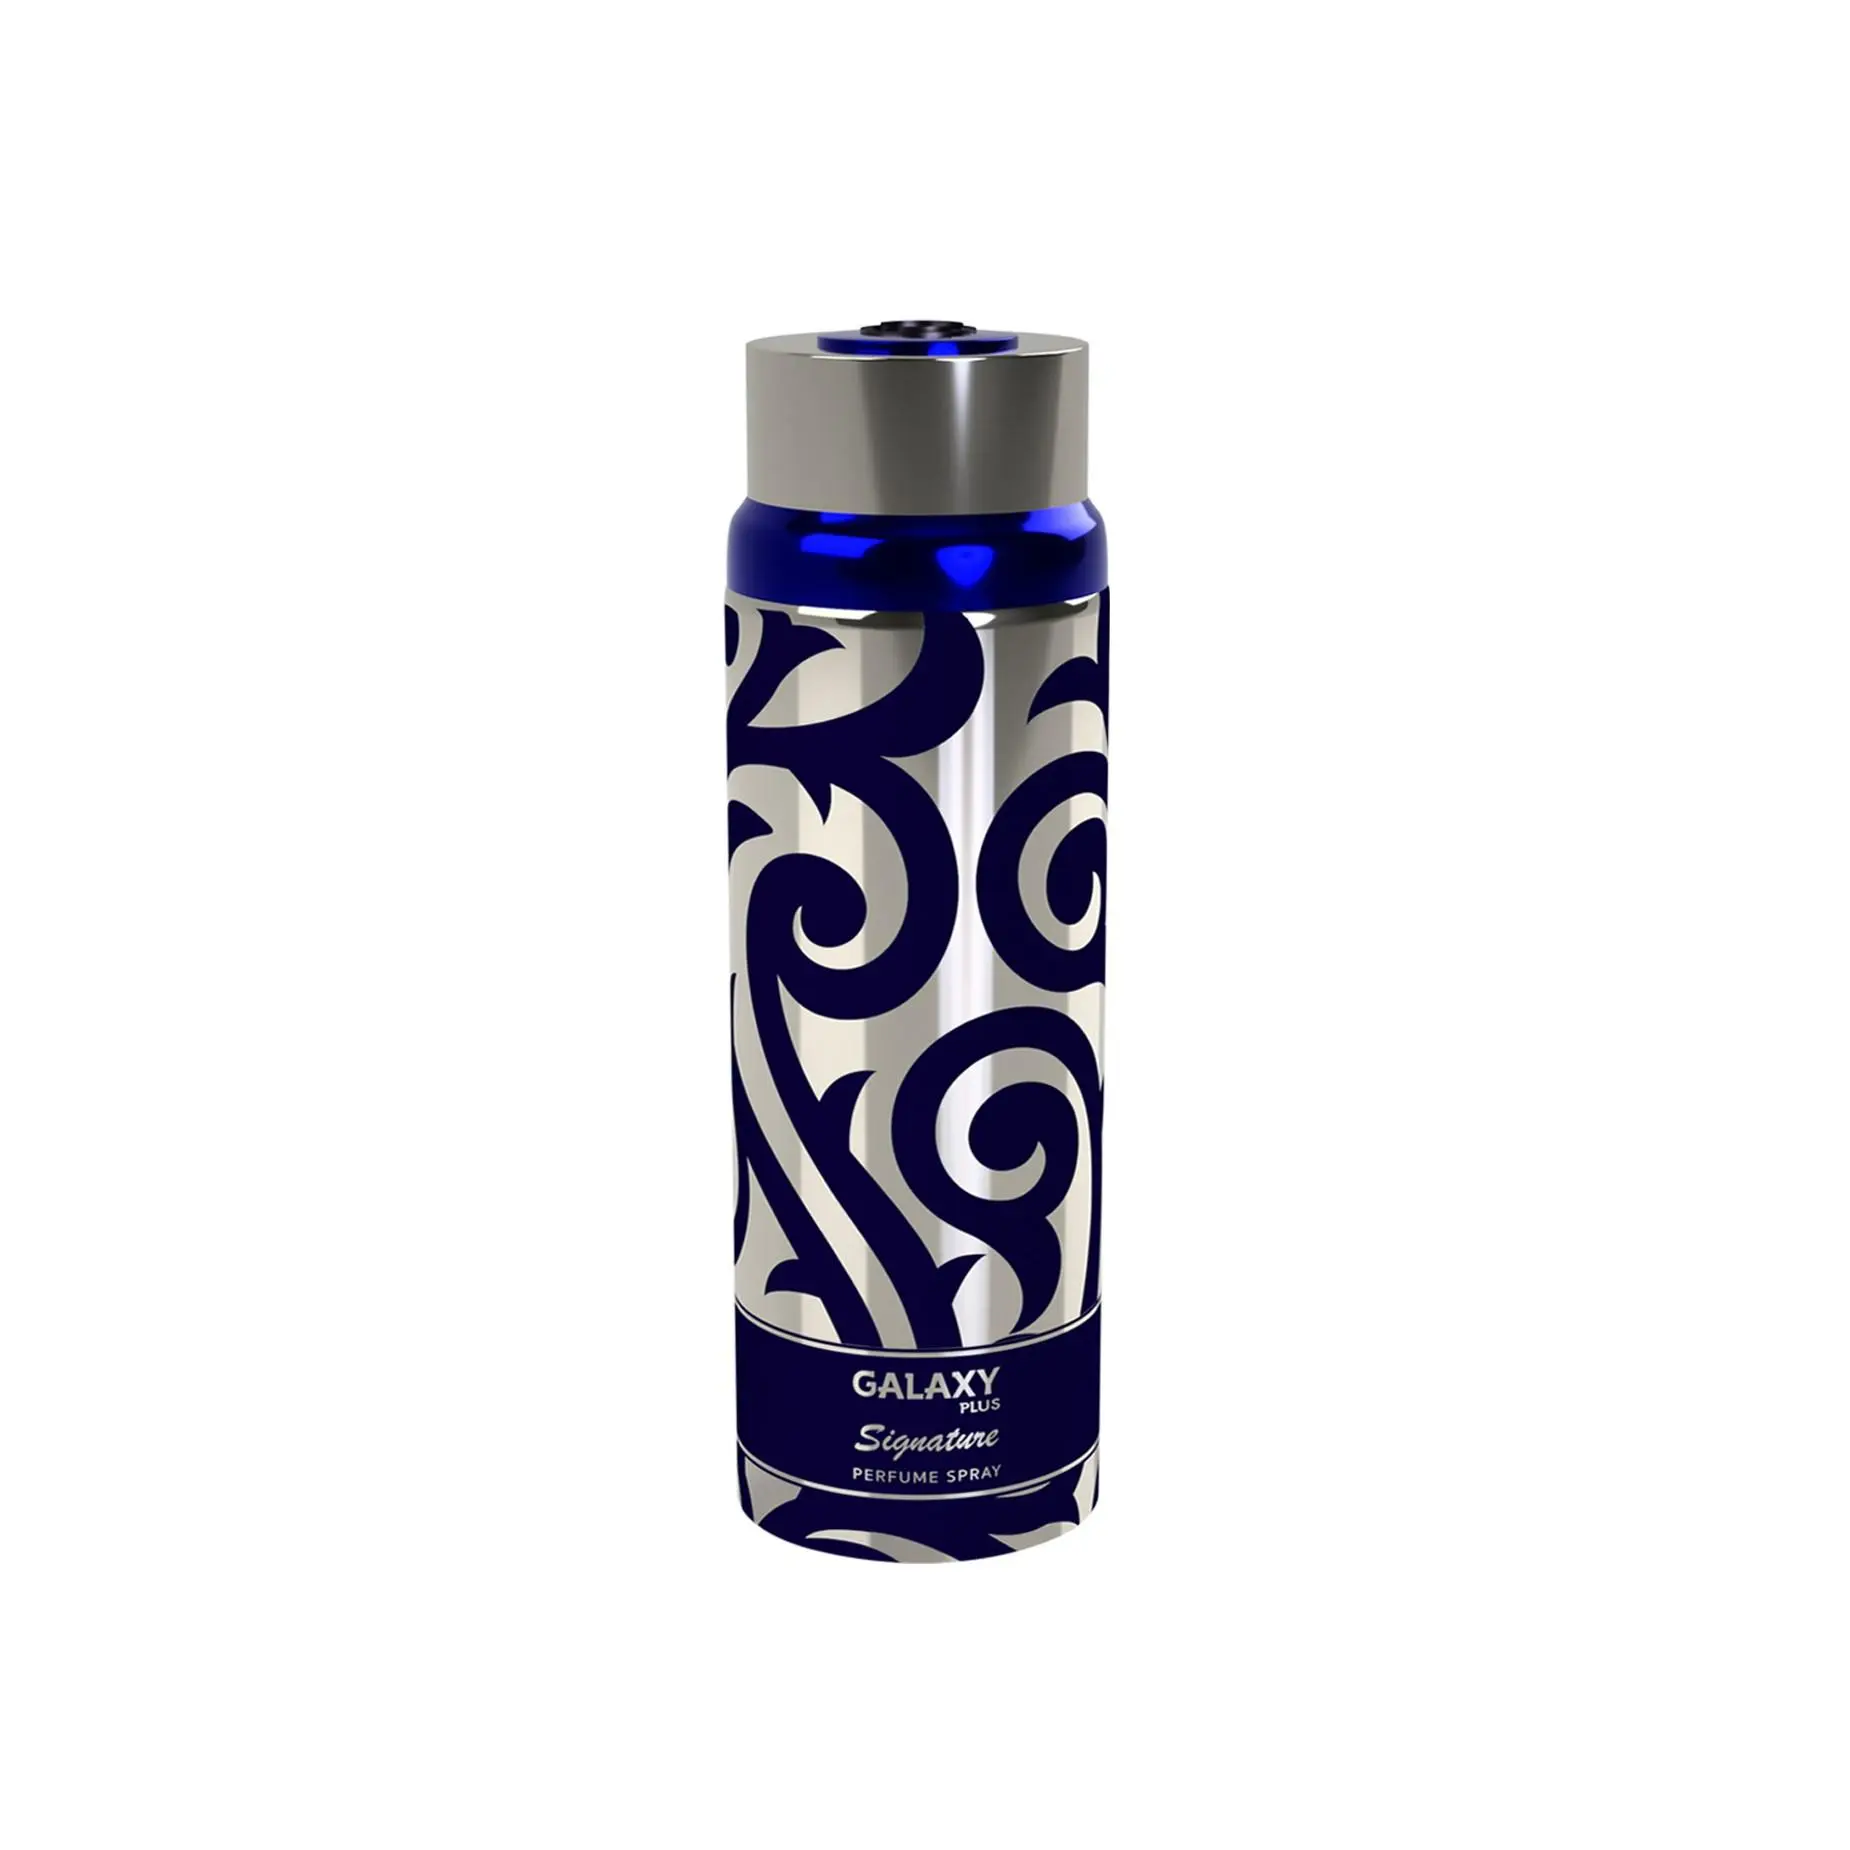 Galaxy Plus Signature Blue 200Ml Perfume Body Spray